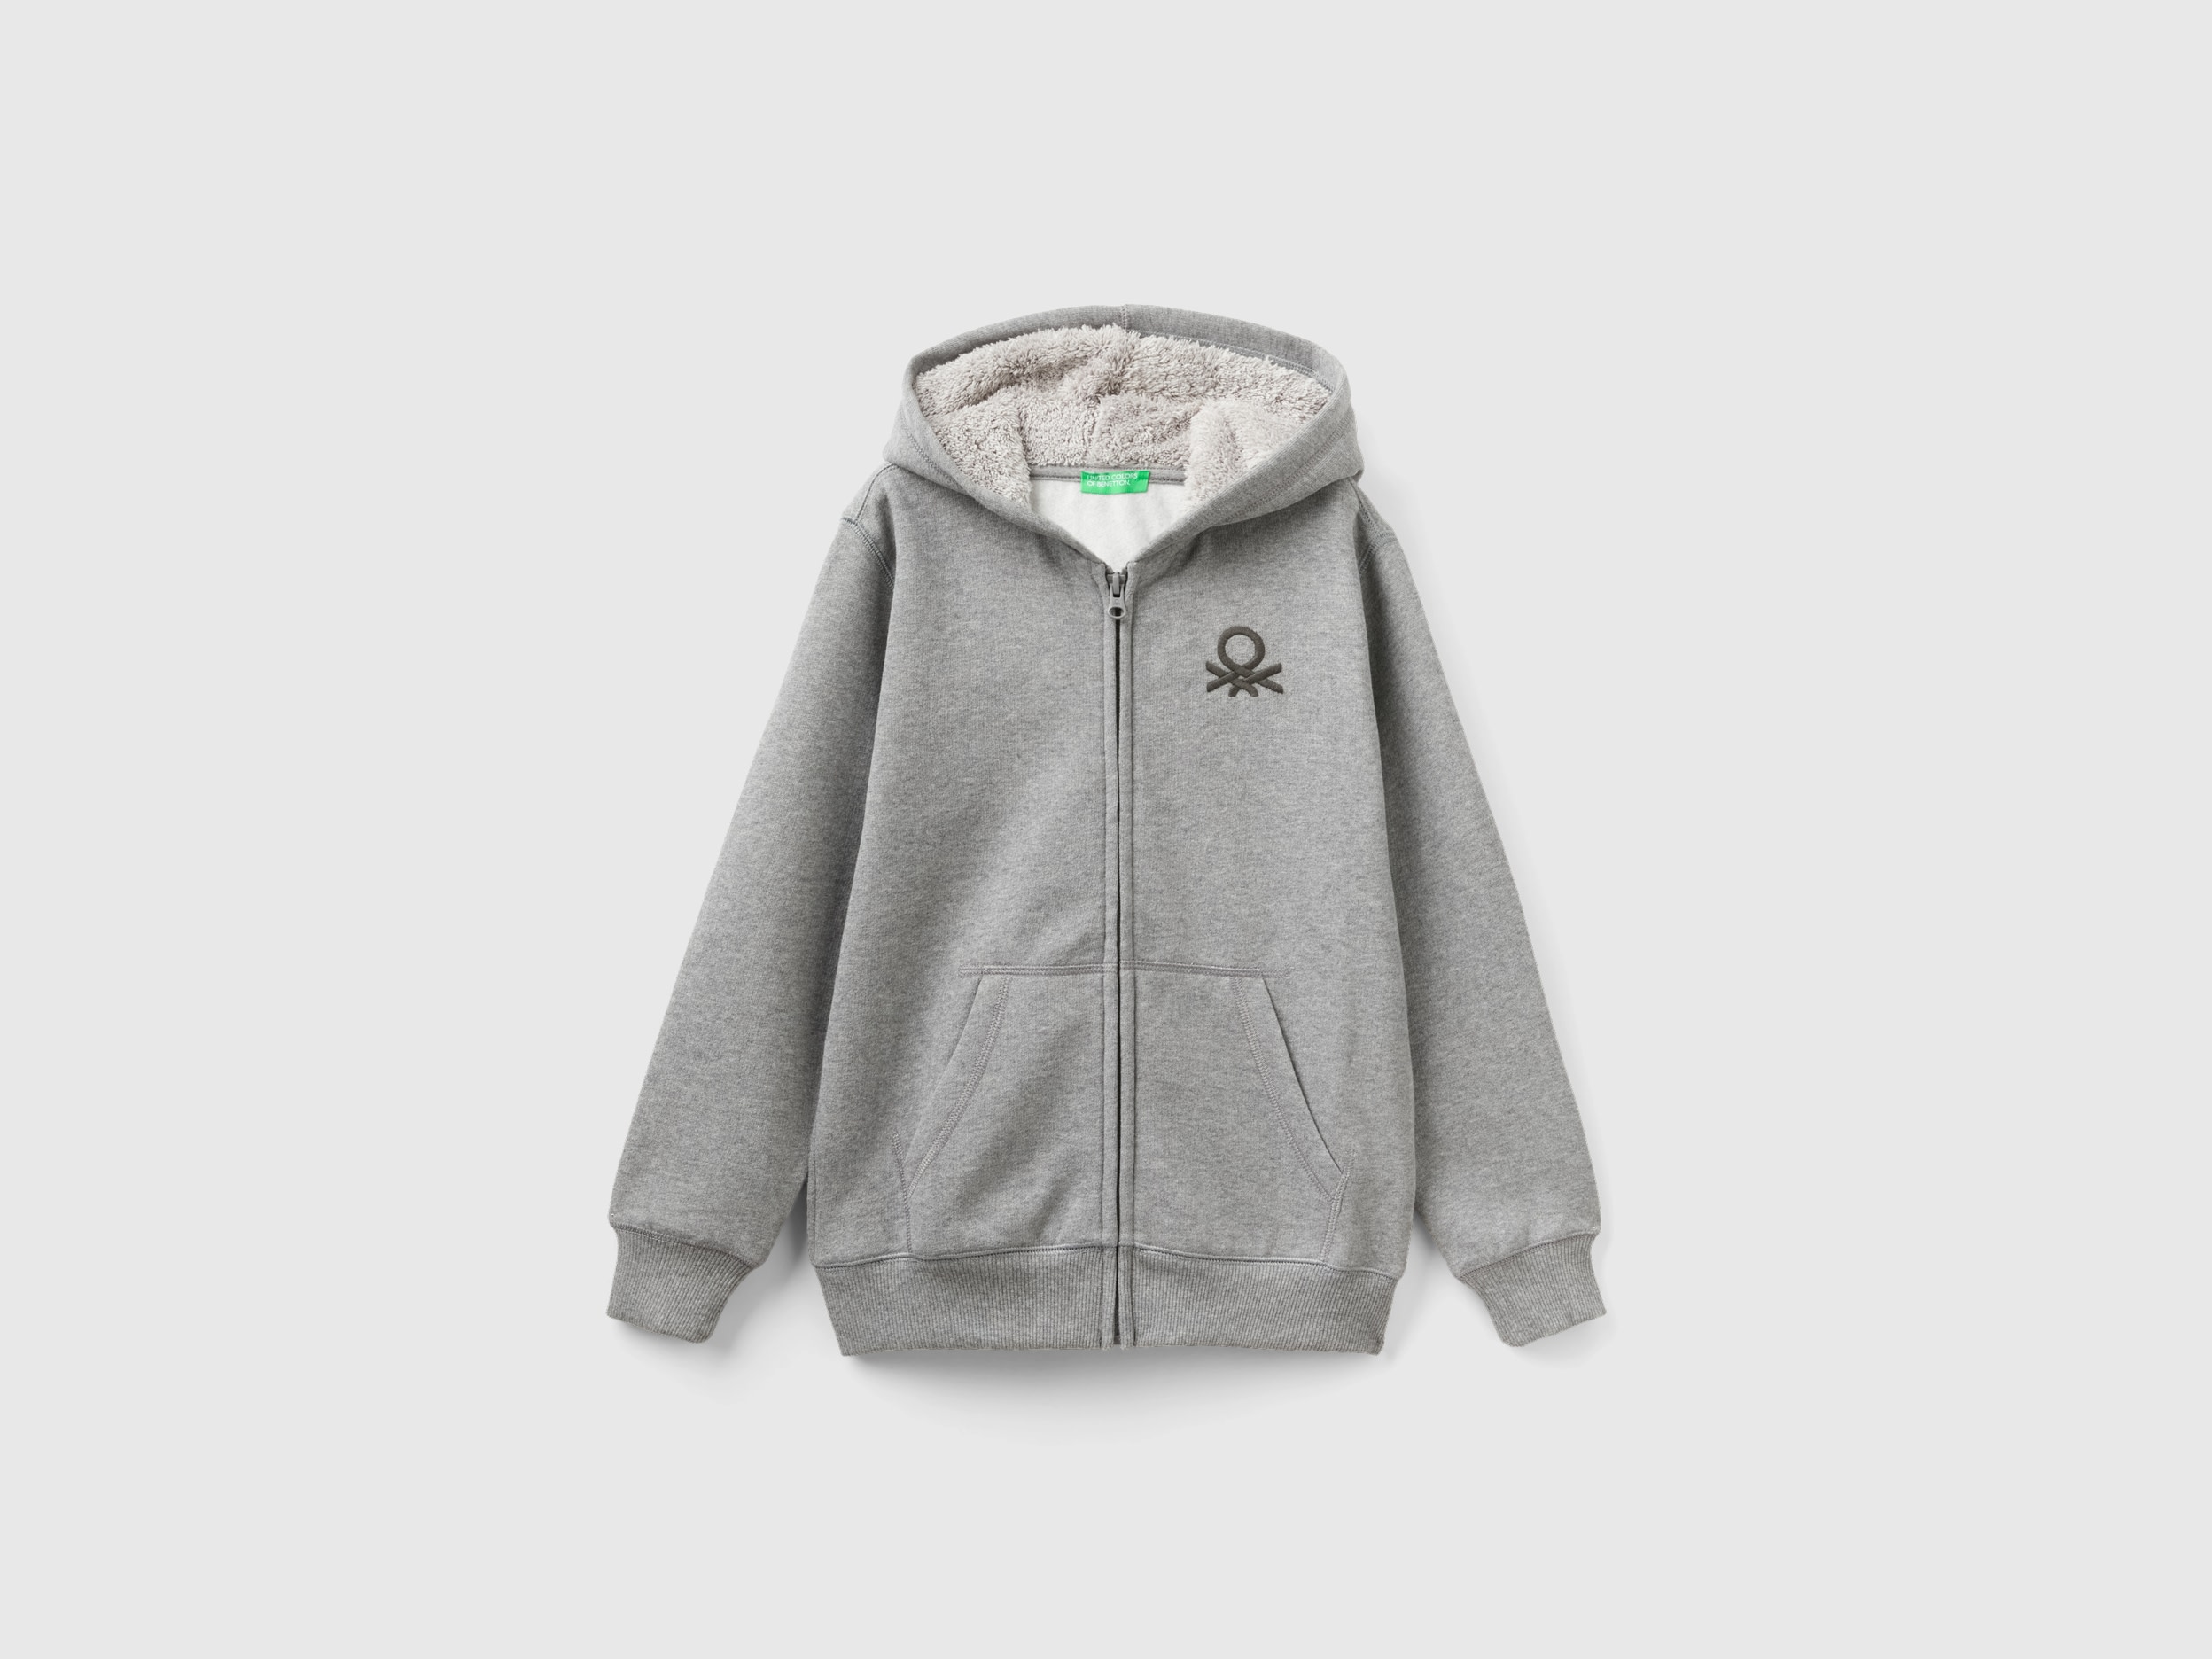 Benetton, Sweatshirt With Lined Hood, size 2XL, Dark Gray, Kids